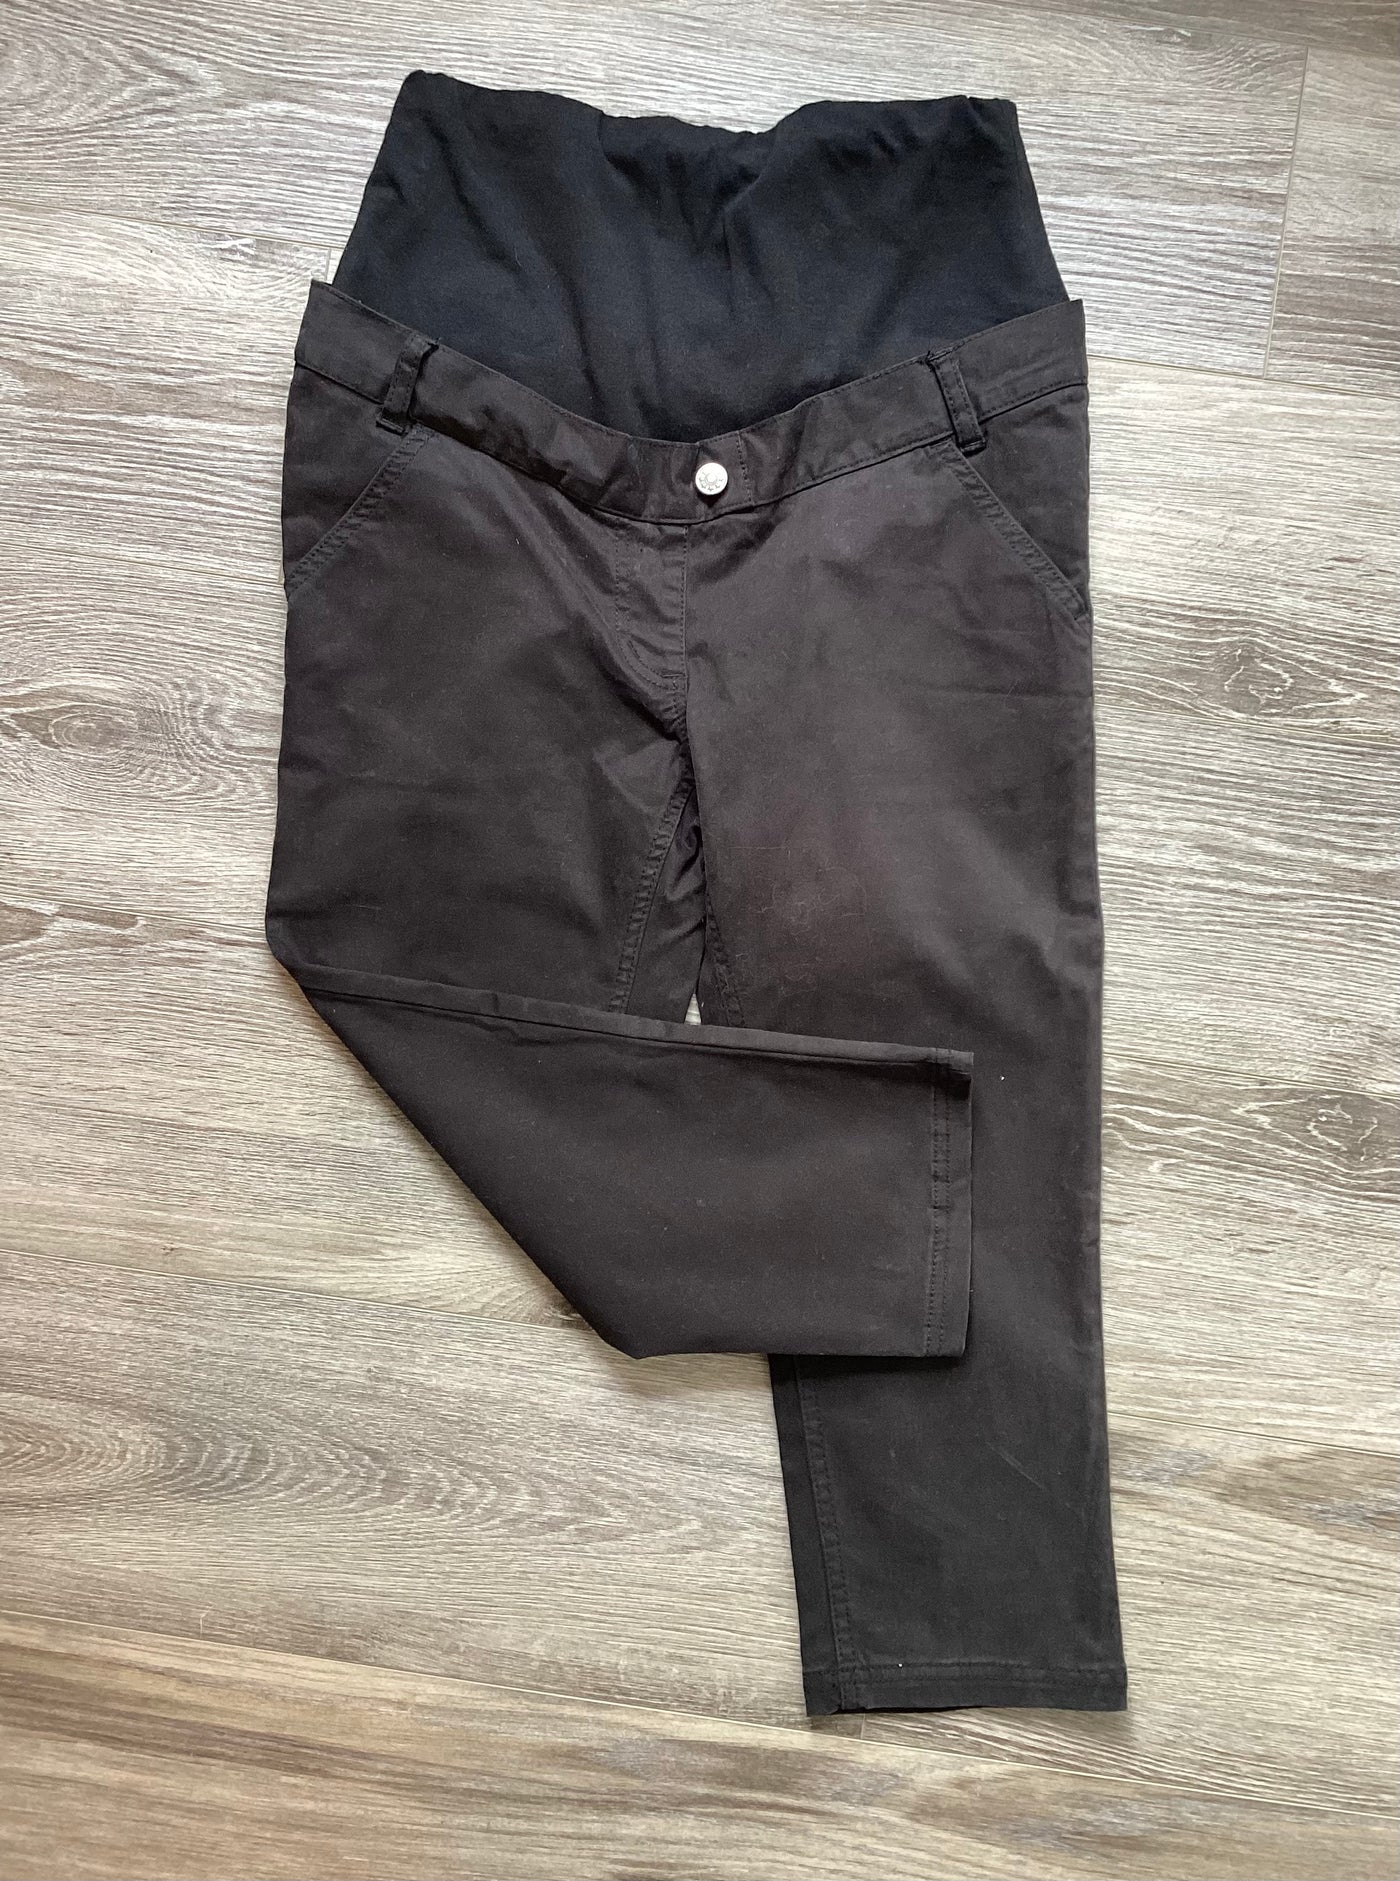 Jojo Maman Bebe black overbump crop chino trousers - Size 6